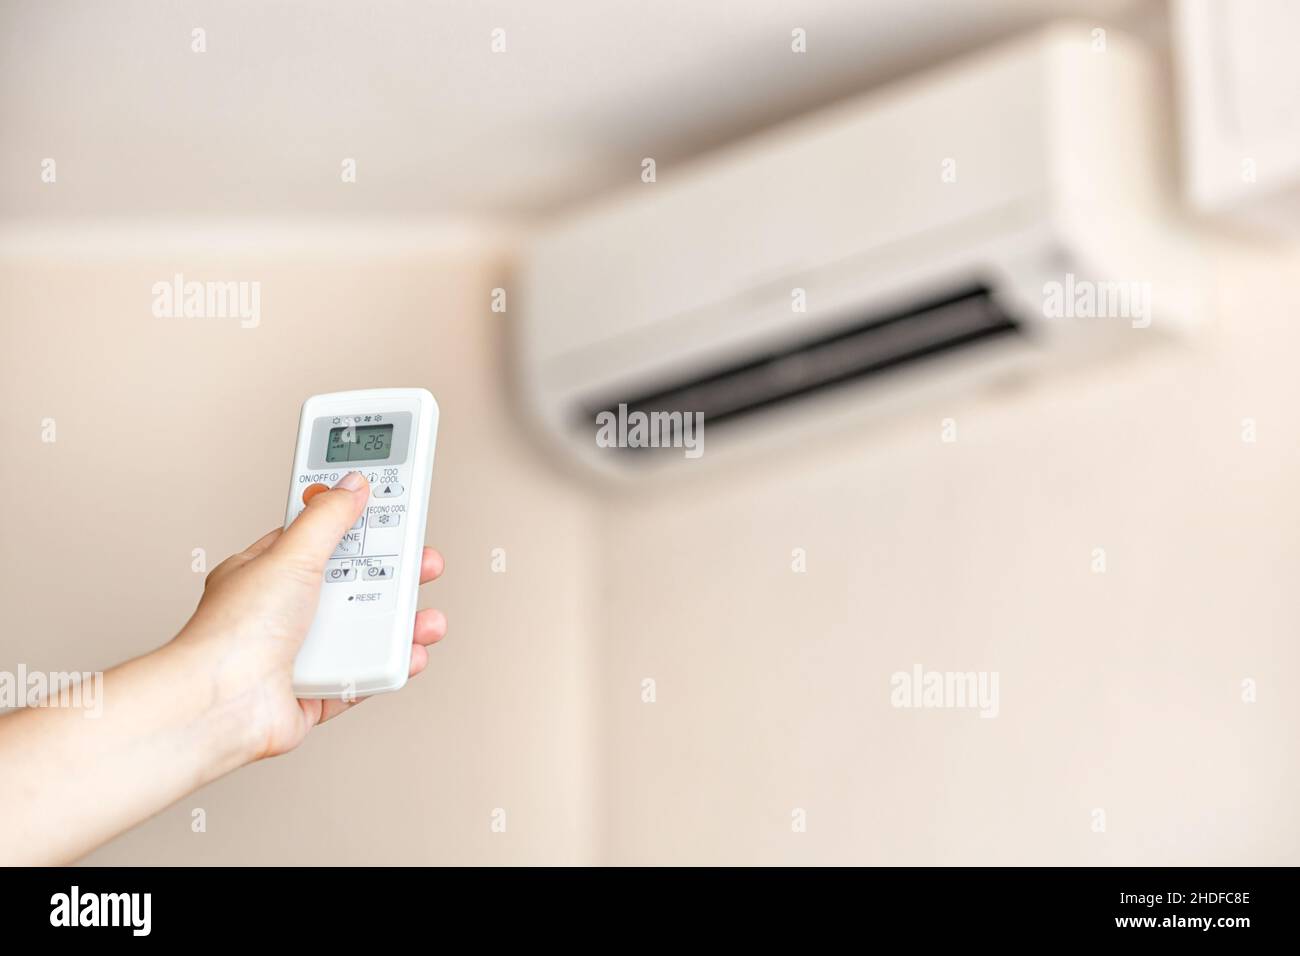 remote control, control, air condition, remote controls, controls, air conditioner, air conditiones, air conditioning Stock Photo